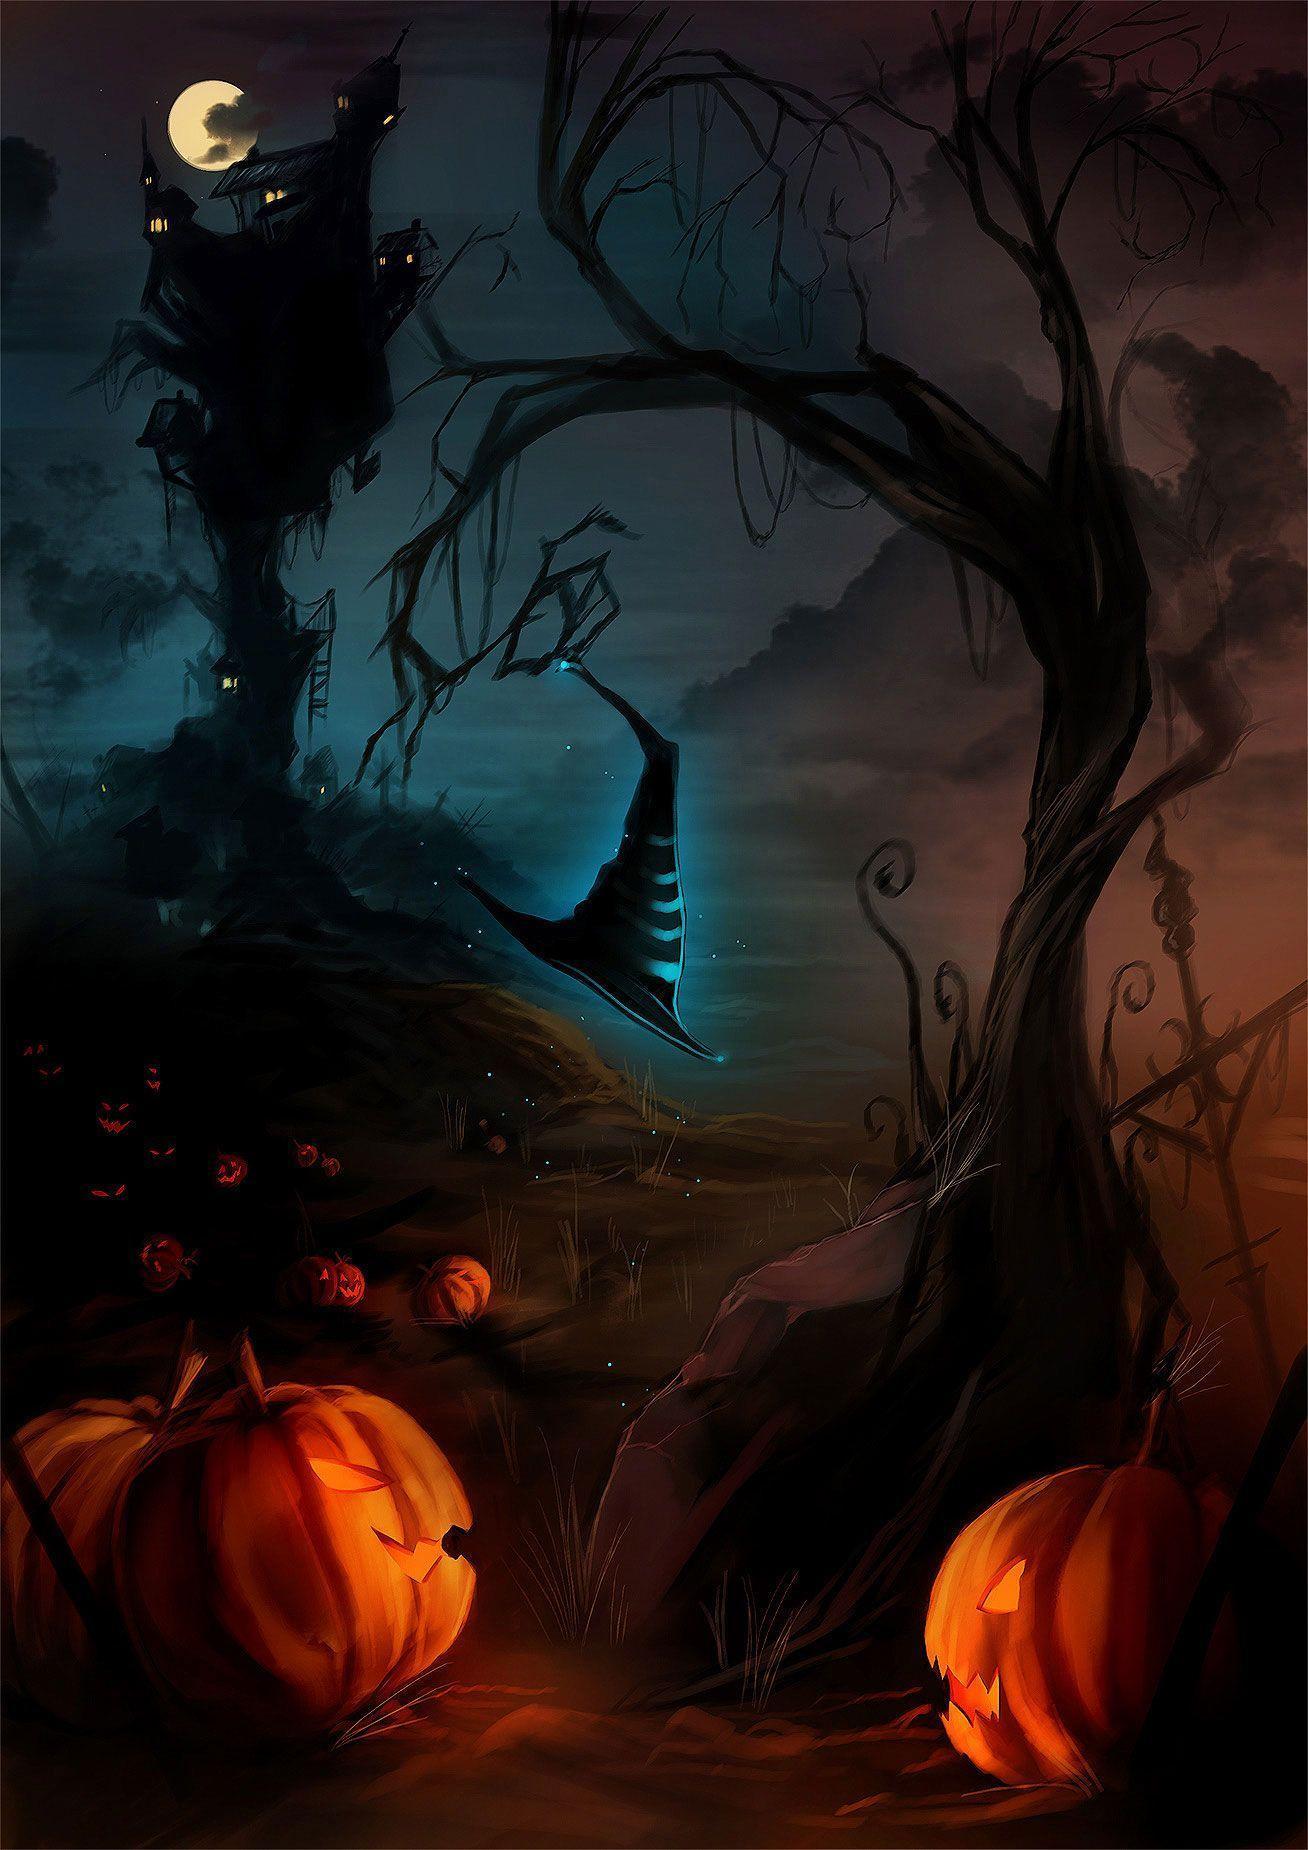 Free Halloween 2013 Background & Wallpaper